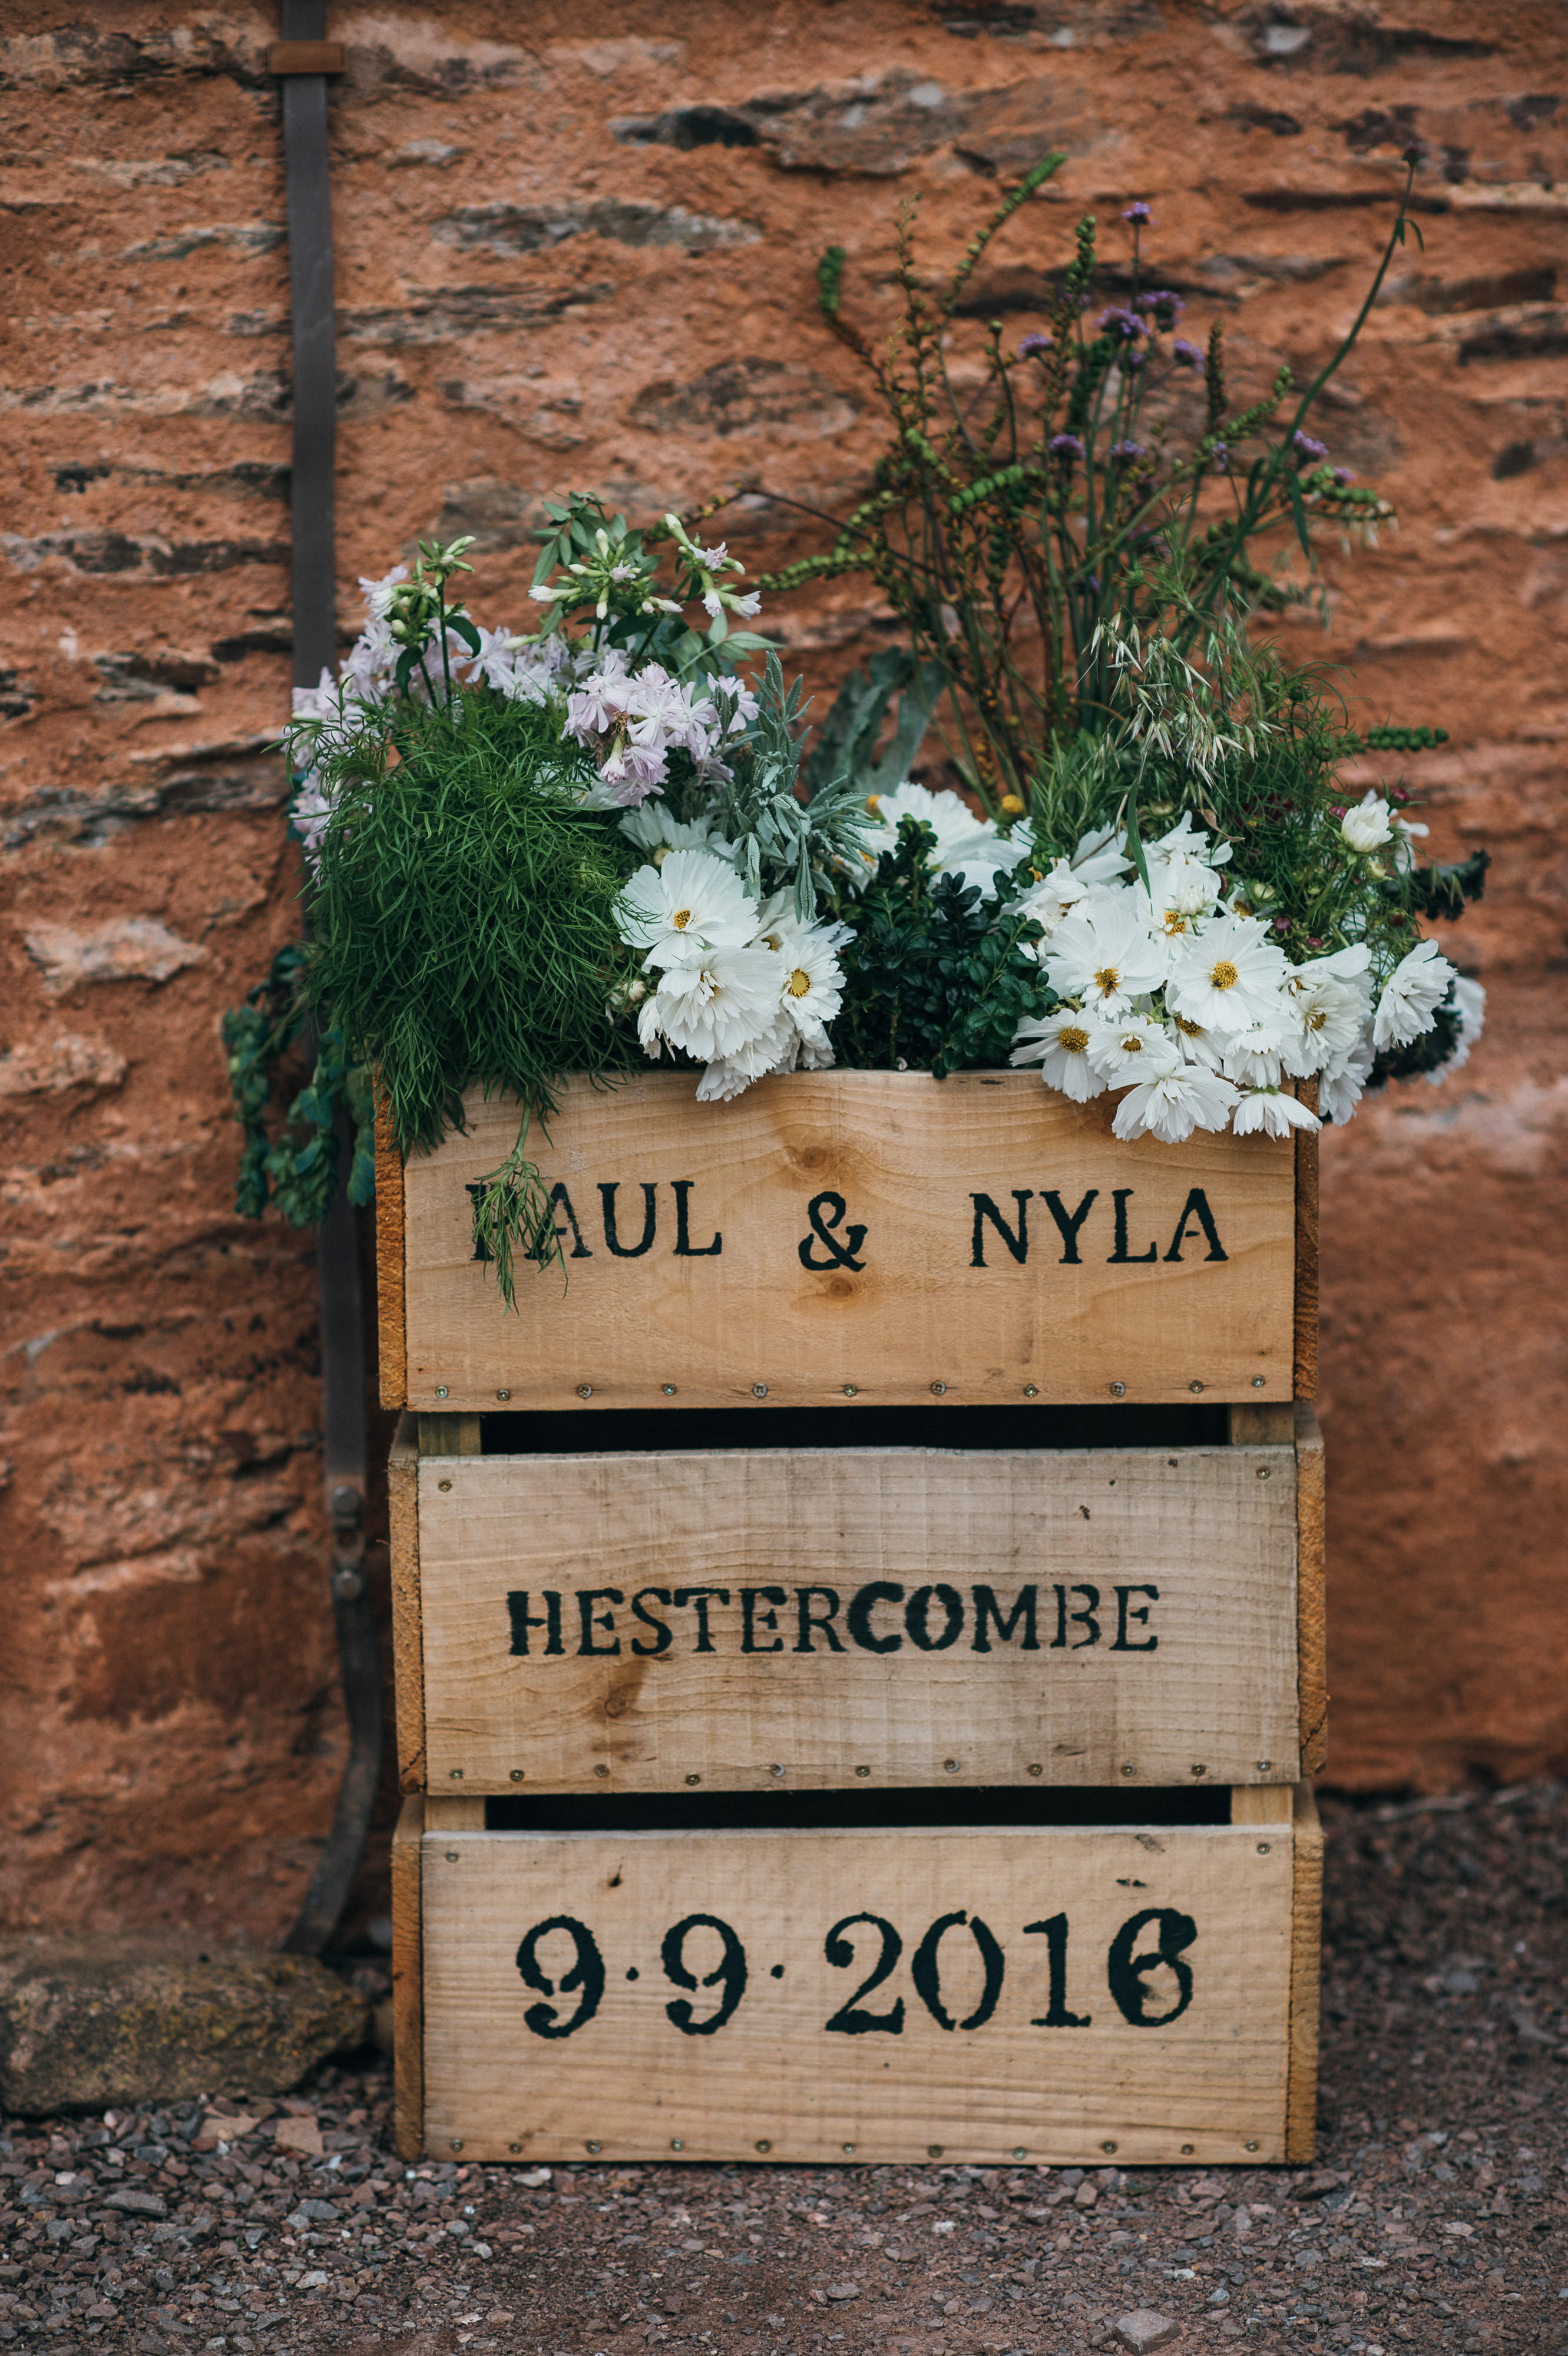 Hestercombe wedding photography 09 wedding details